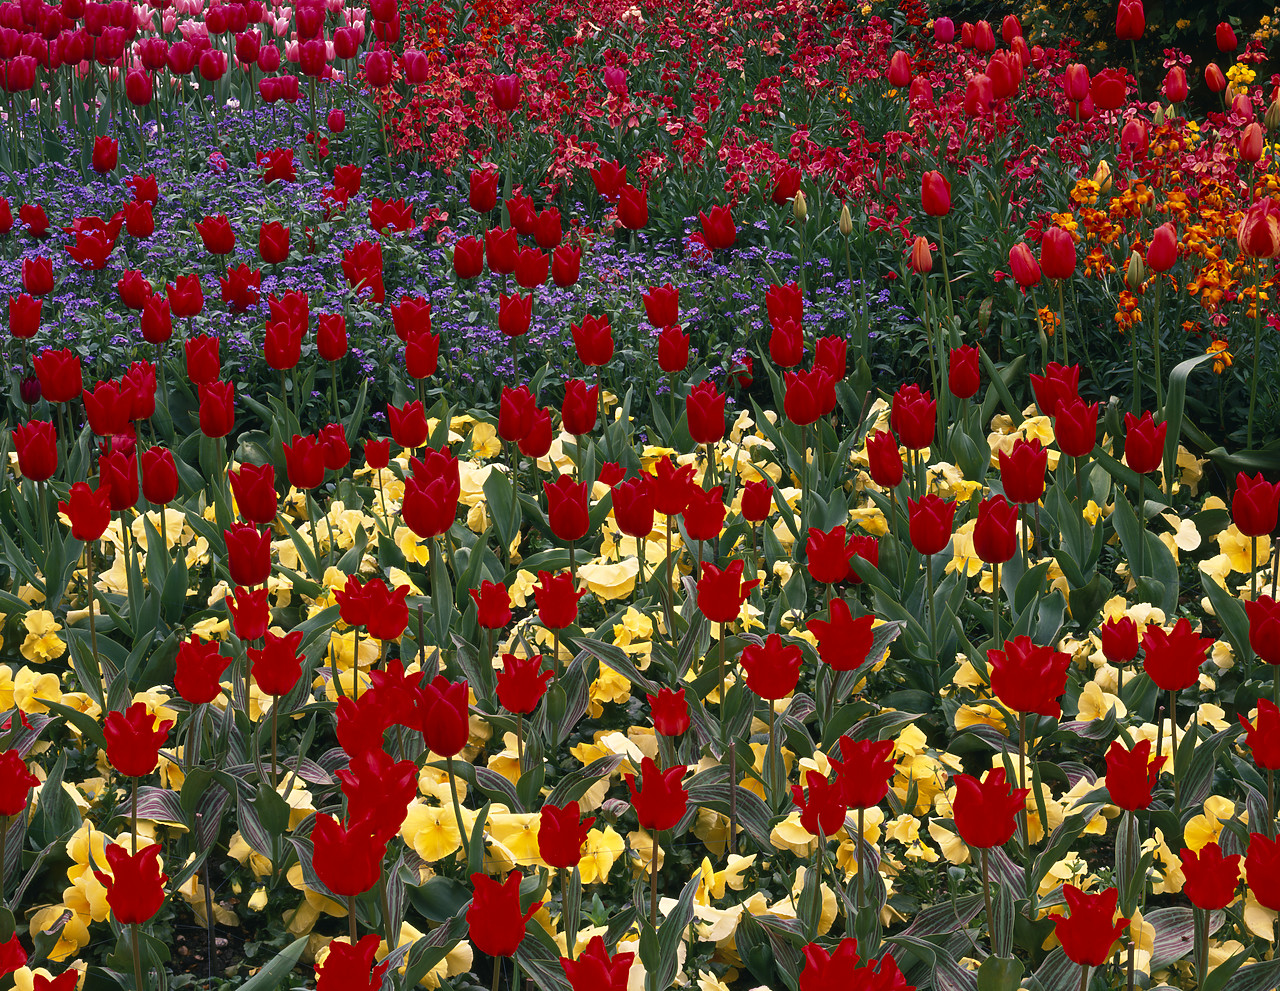 #955310-2 - Tulips, St. Jame's Park, London, England